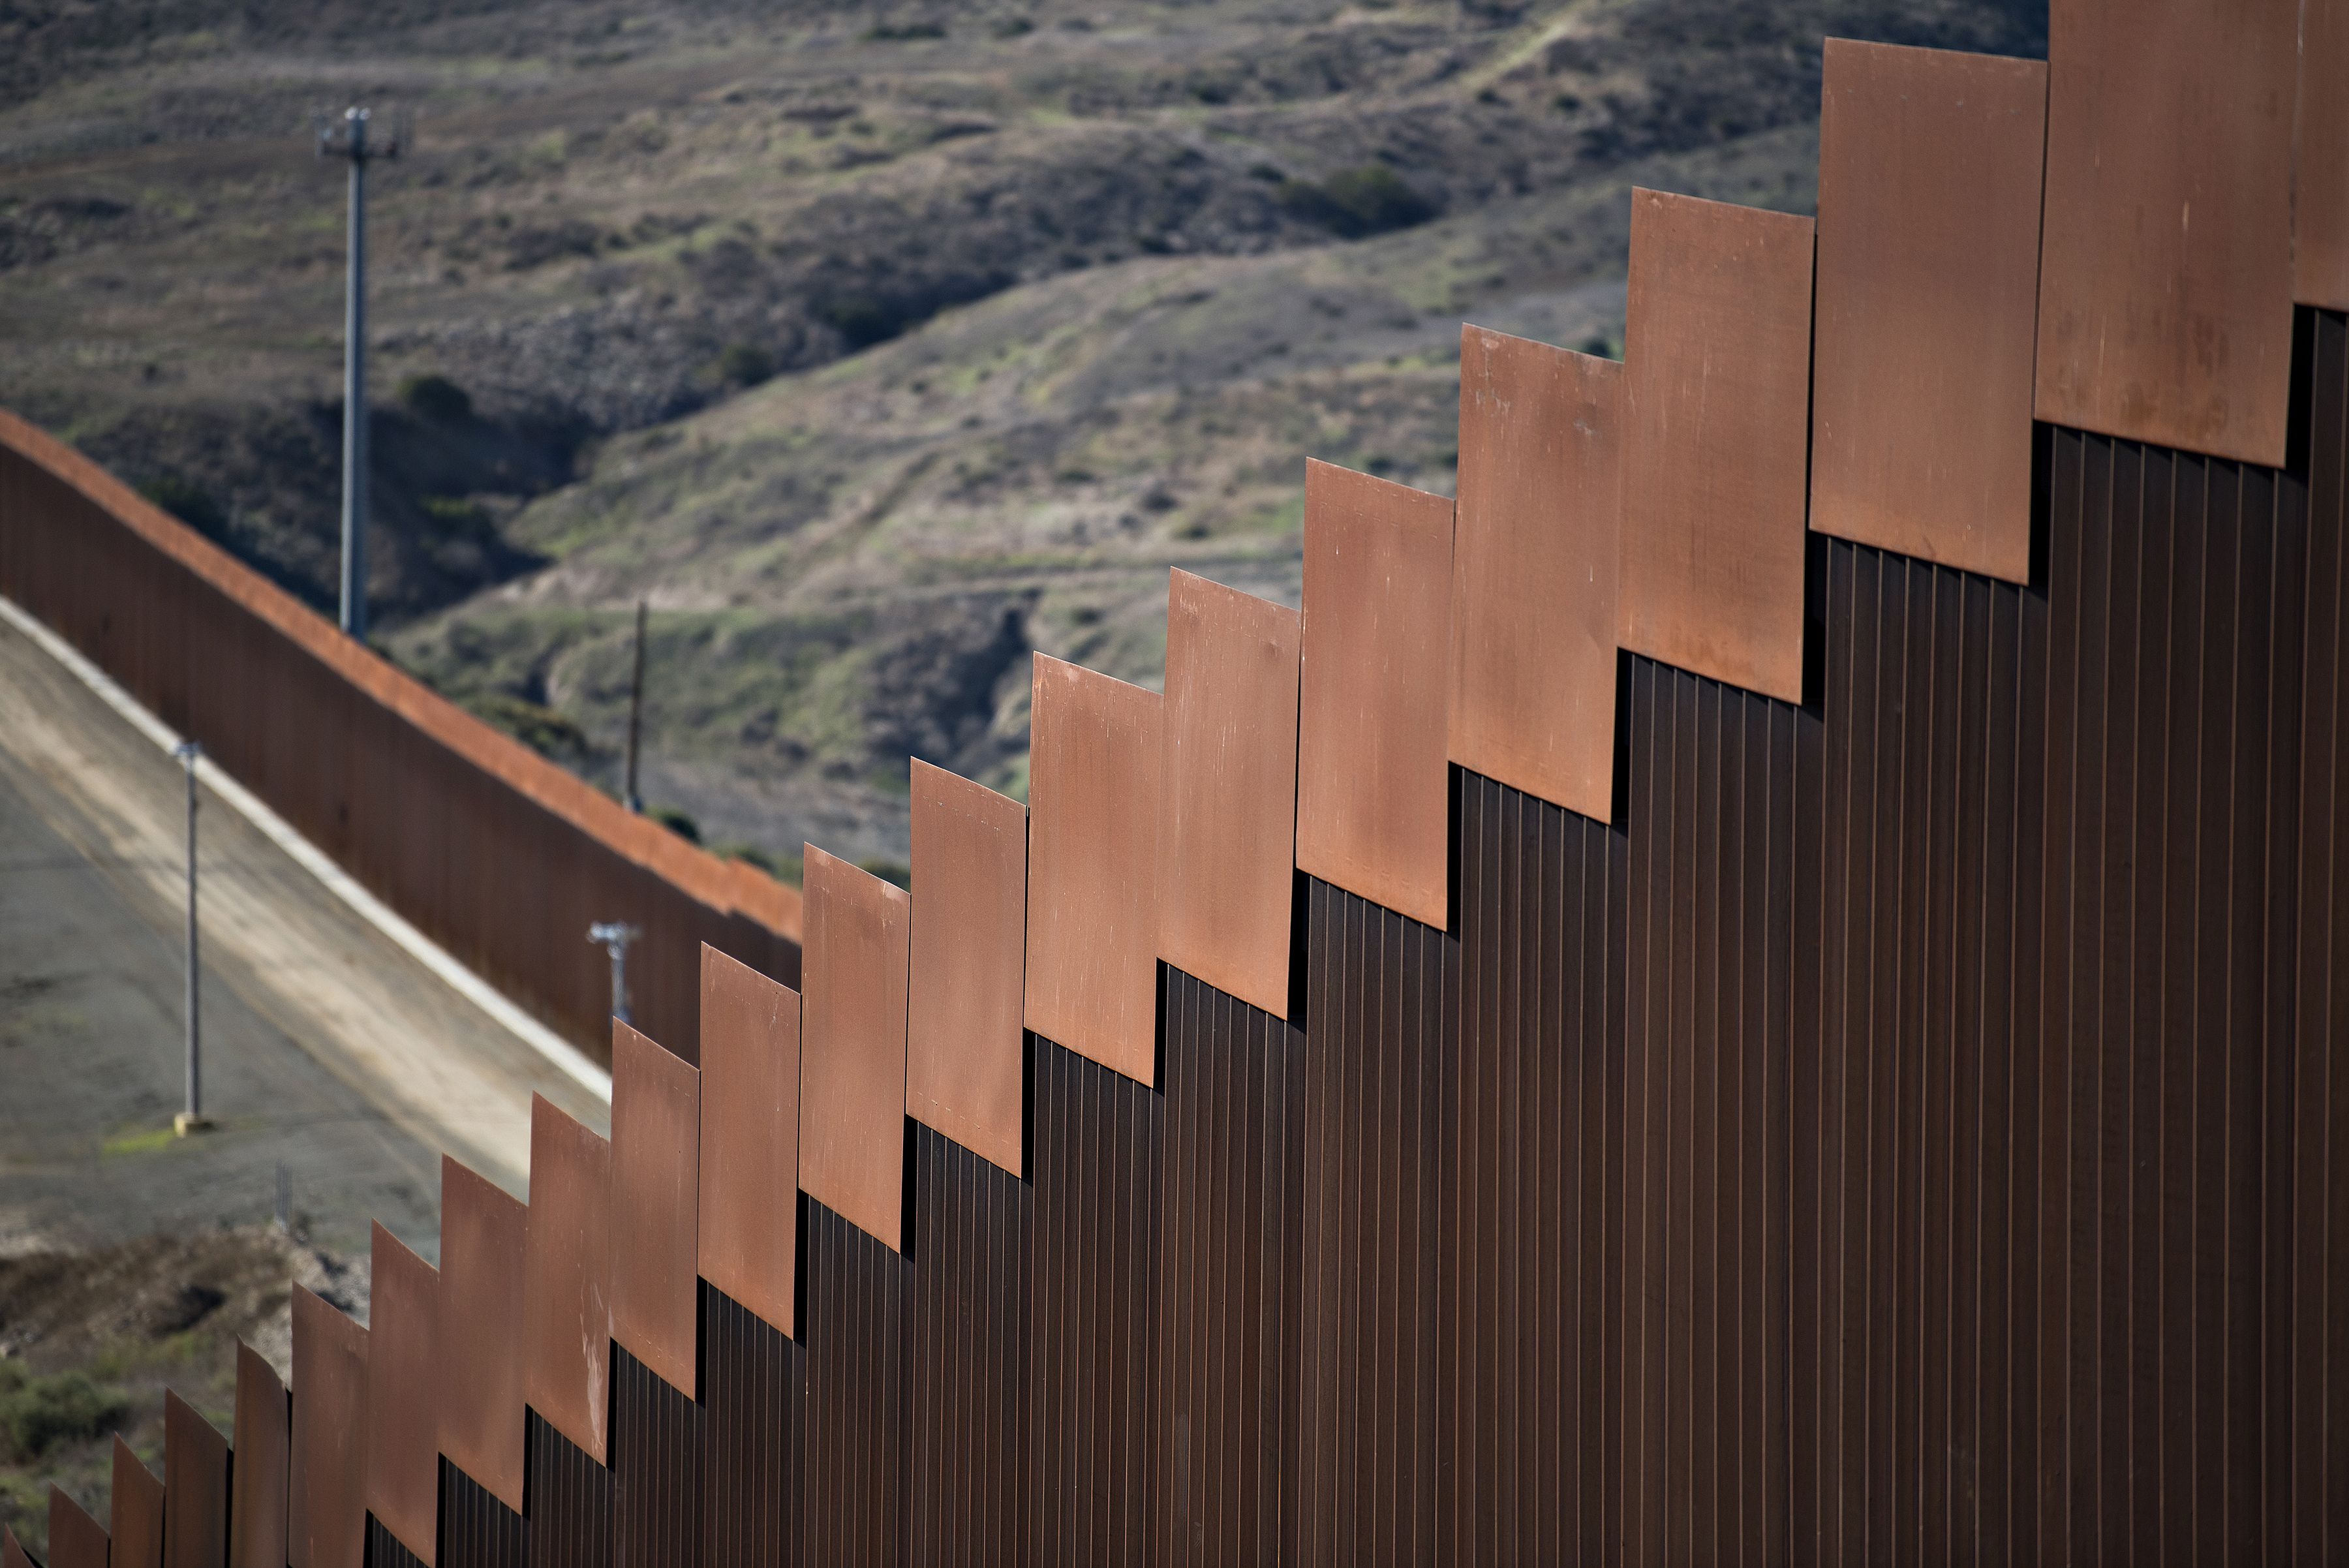 The border wall in the Libertad Parte Alta neighborhood near the Tijuana airport Dec. 1. Image by Amanda Cowan. Mexico, 2019.